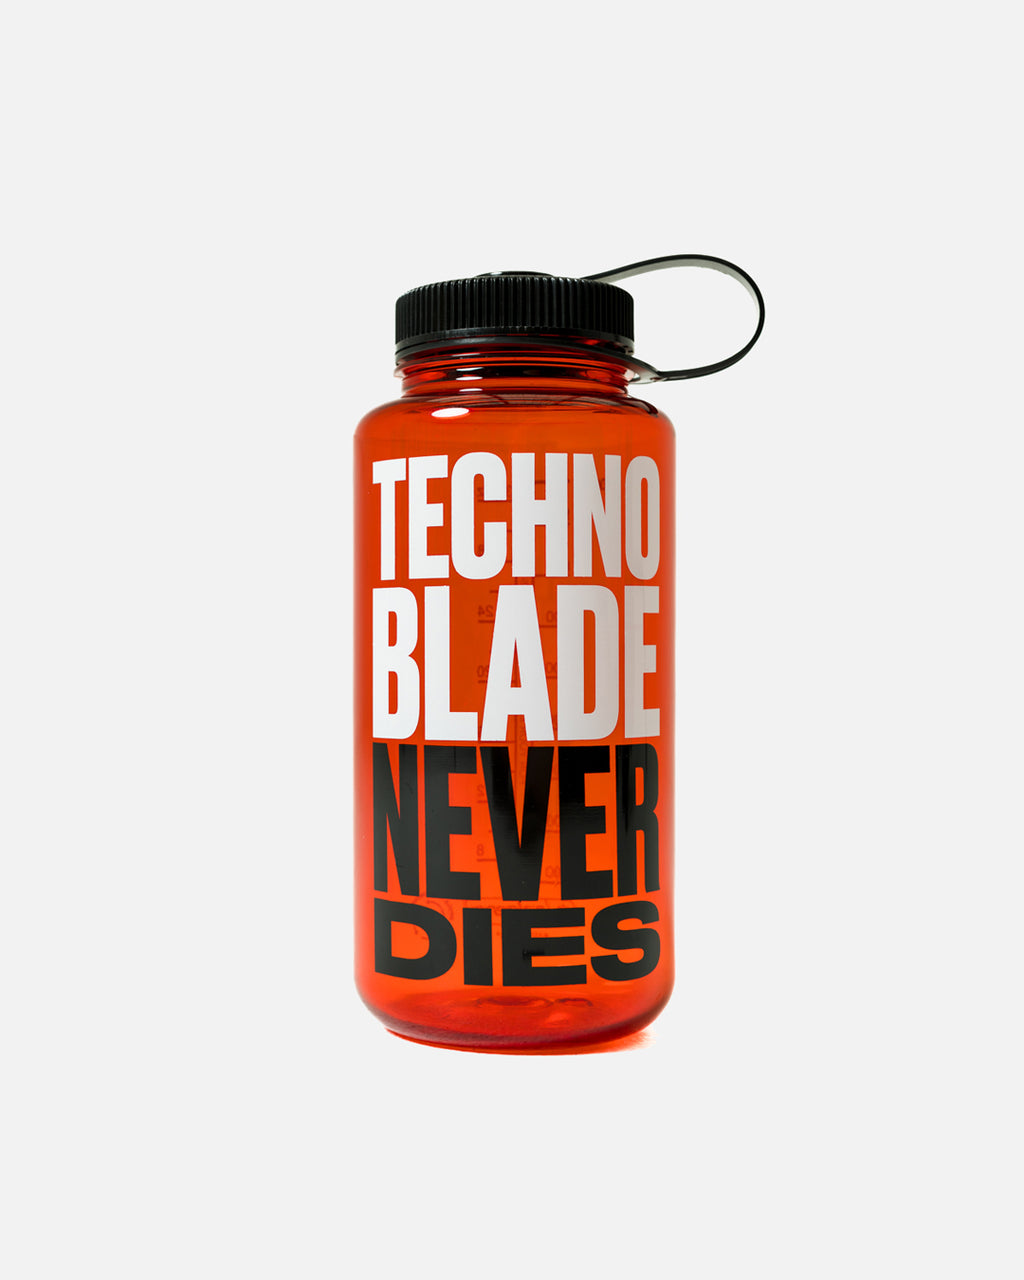 techno says technoblade never dies｜TikTok Search